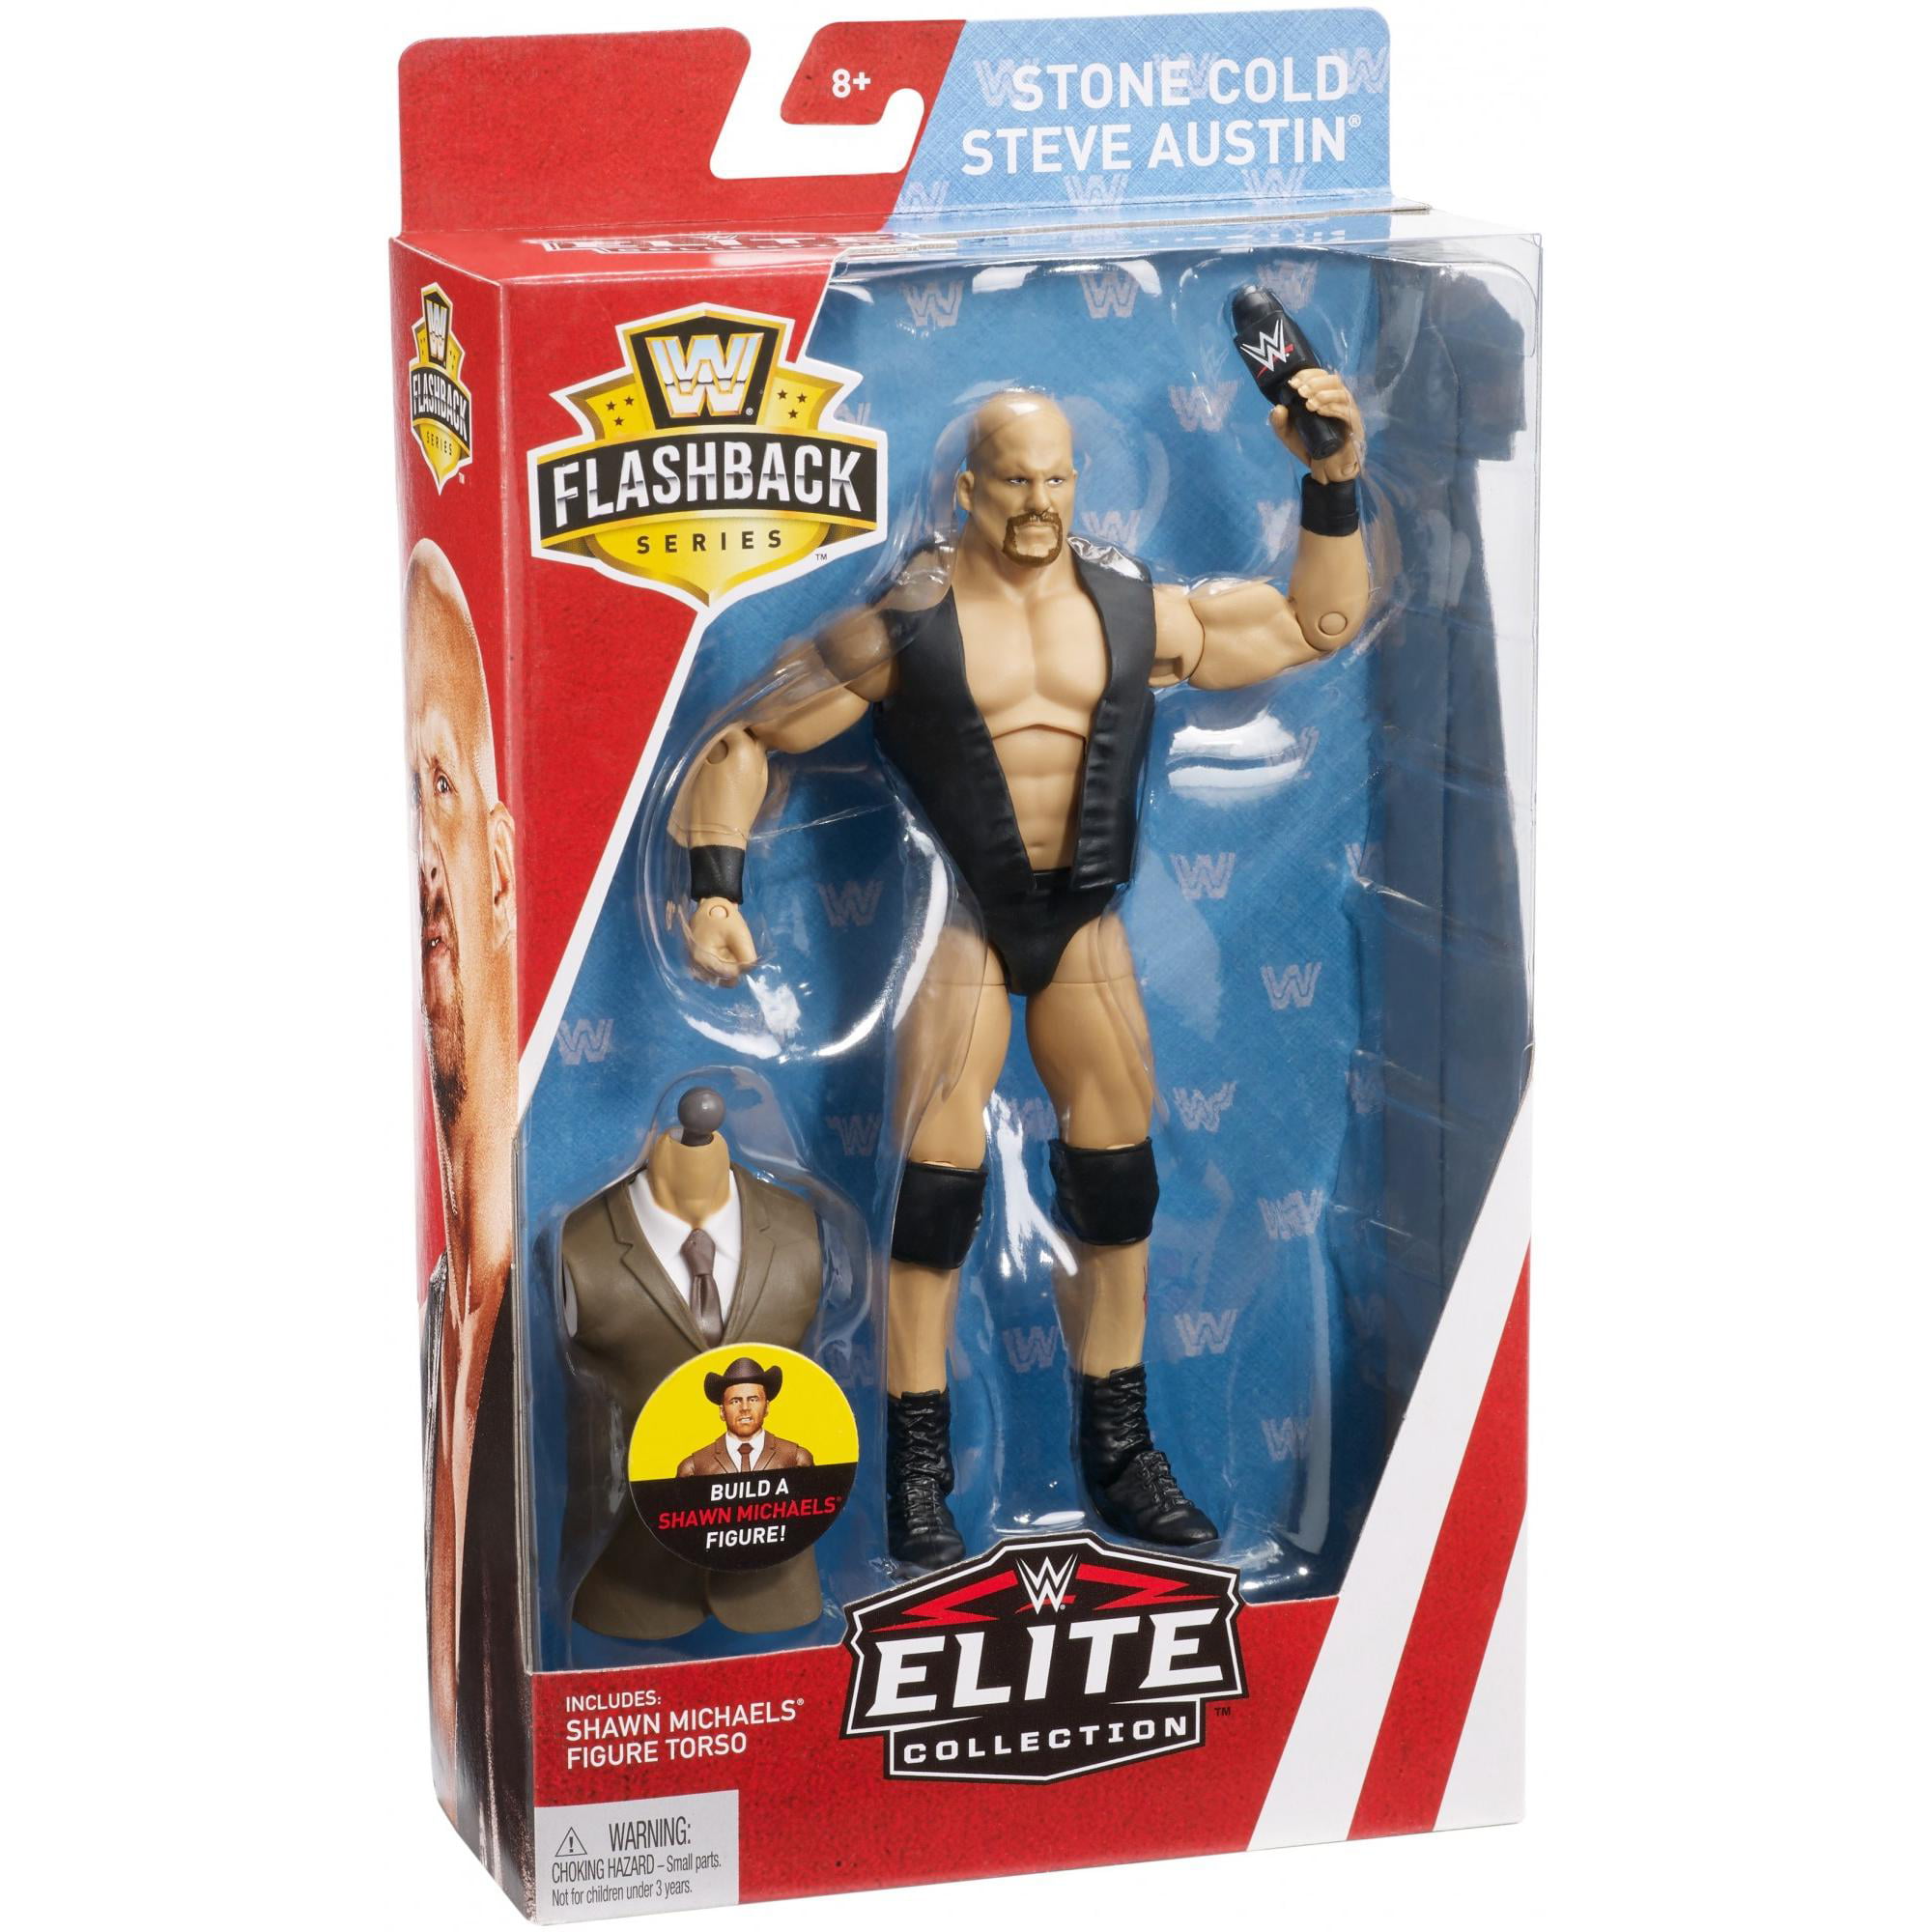 Flashback Details about   WWE Mattel Elite Legends Series 1 Stone Cold Steve Austin Figure